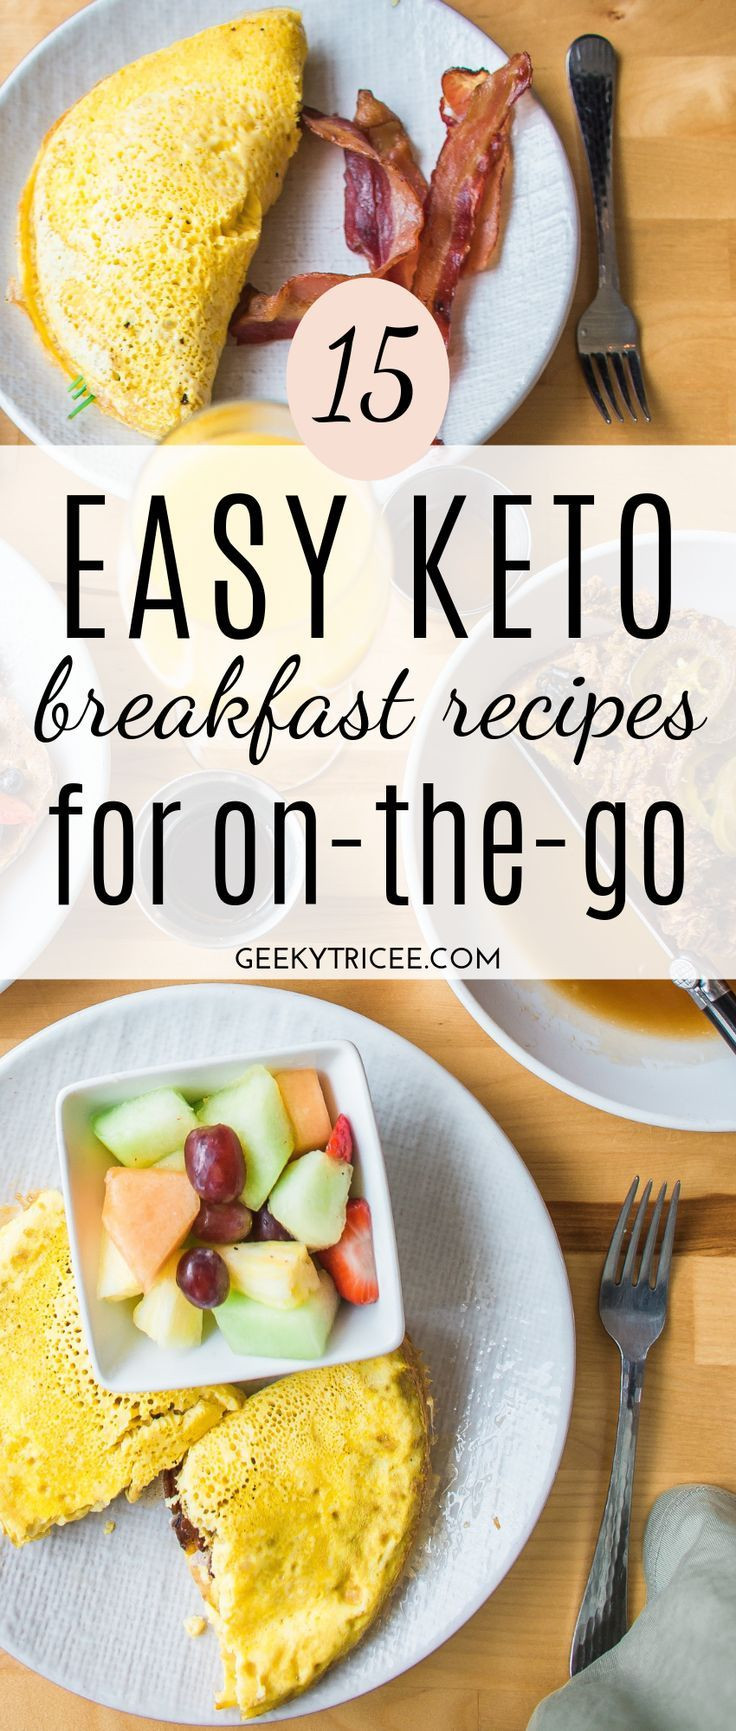 Clean Keto Breakfast
 15 keto breakfast recipes for those on the go mornings